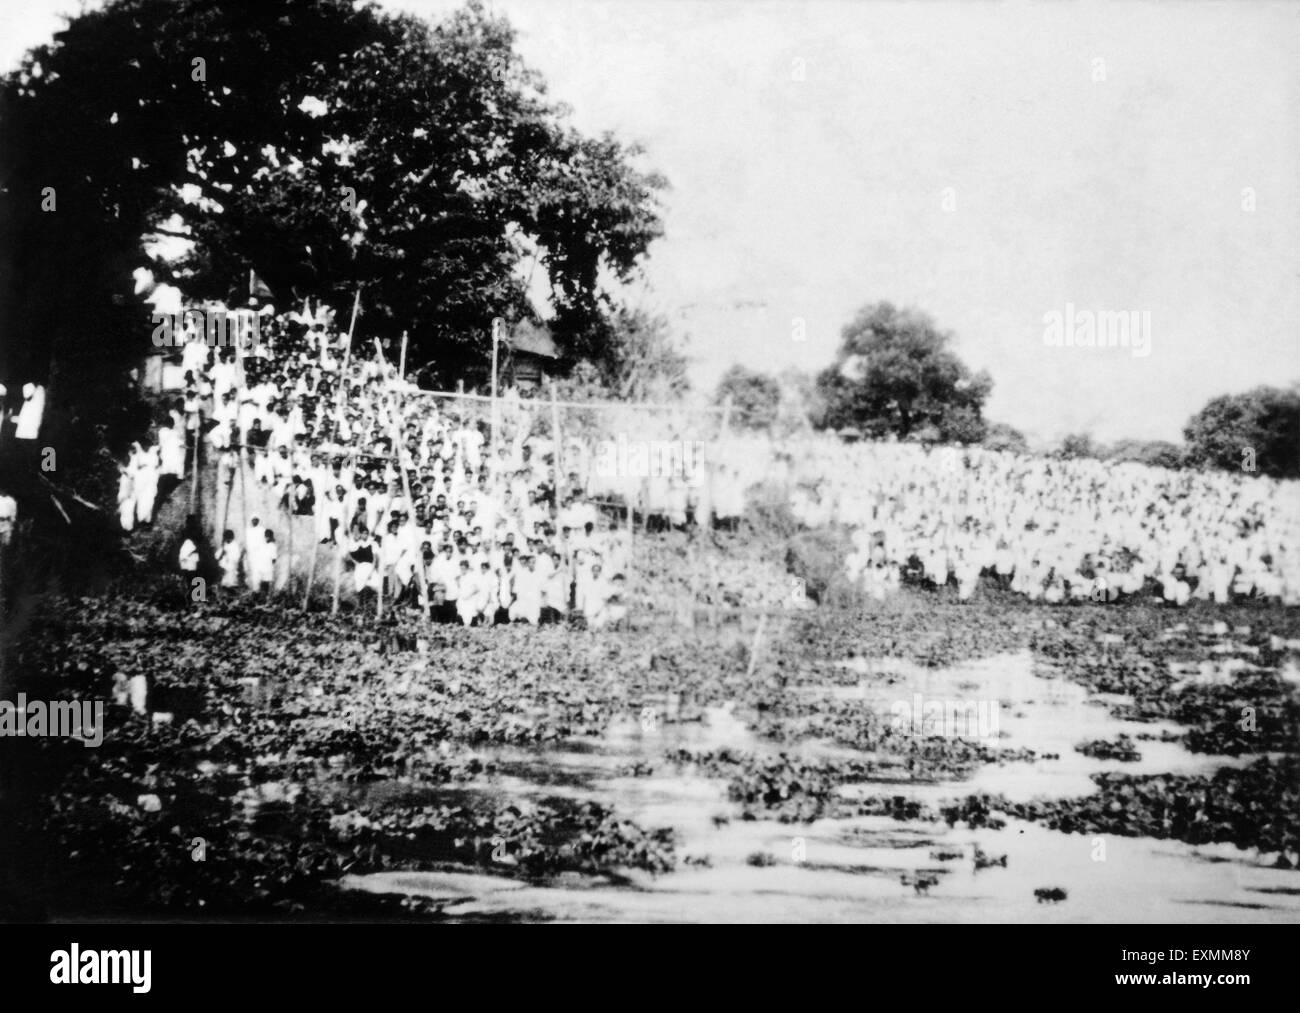 Mahatma Gandhi ashes immersed in Ganga river, Dhaka, Bengal, February 1948, India, Bangladesh, Asia, old vintage 1900s picture Stock Photo